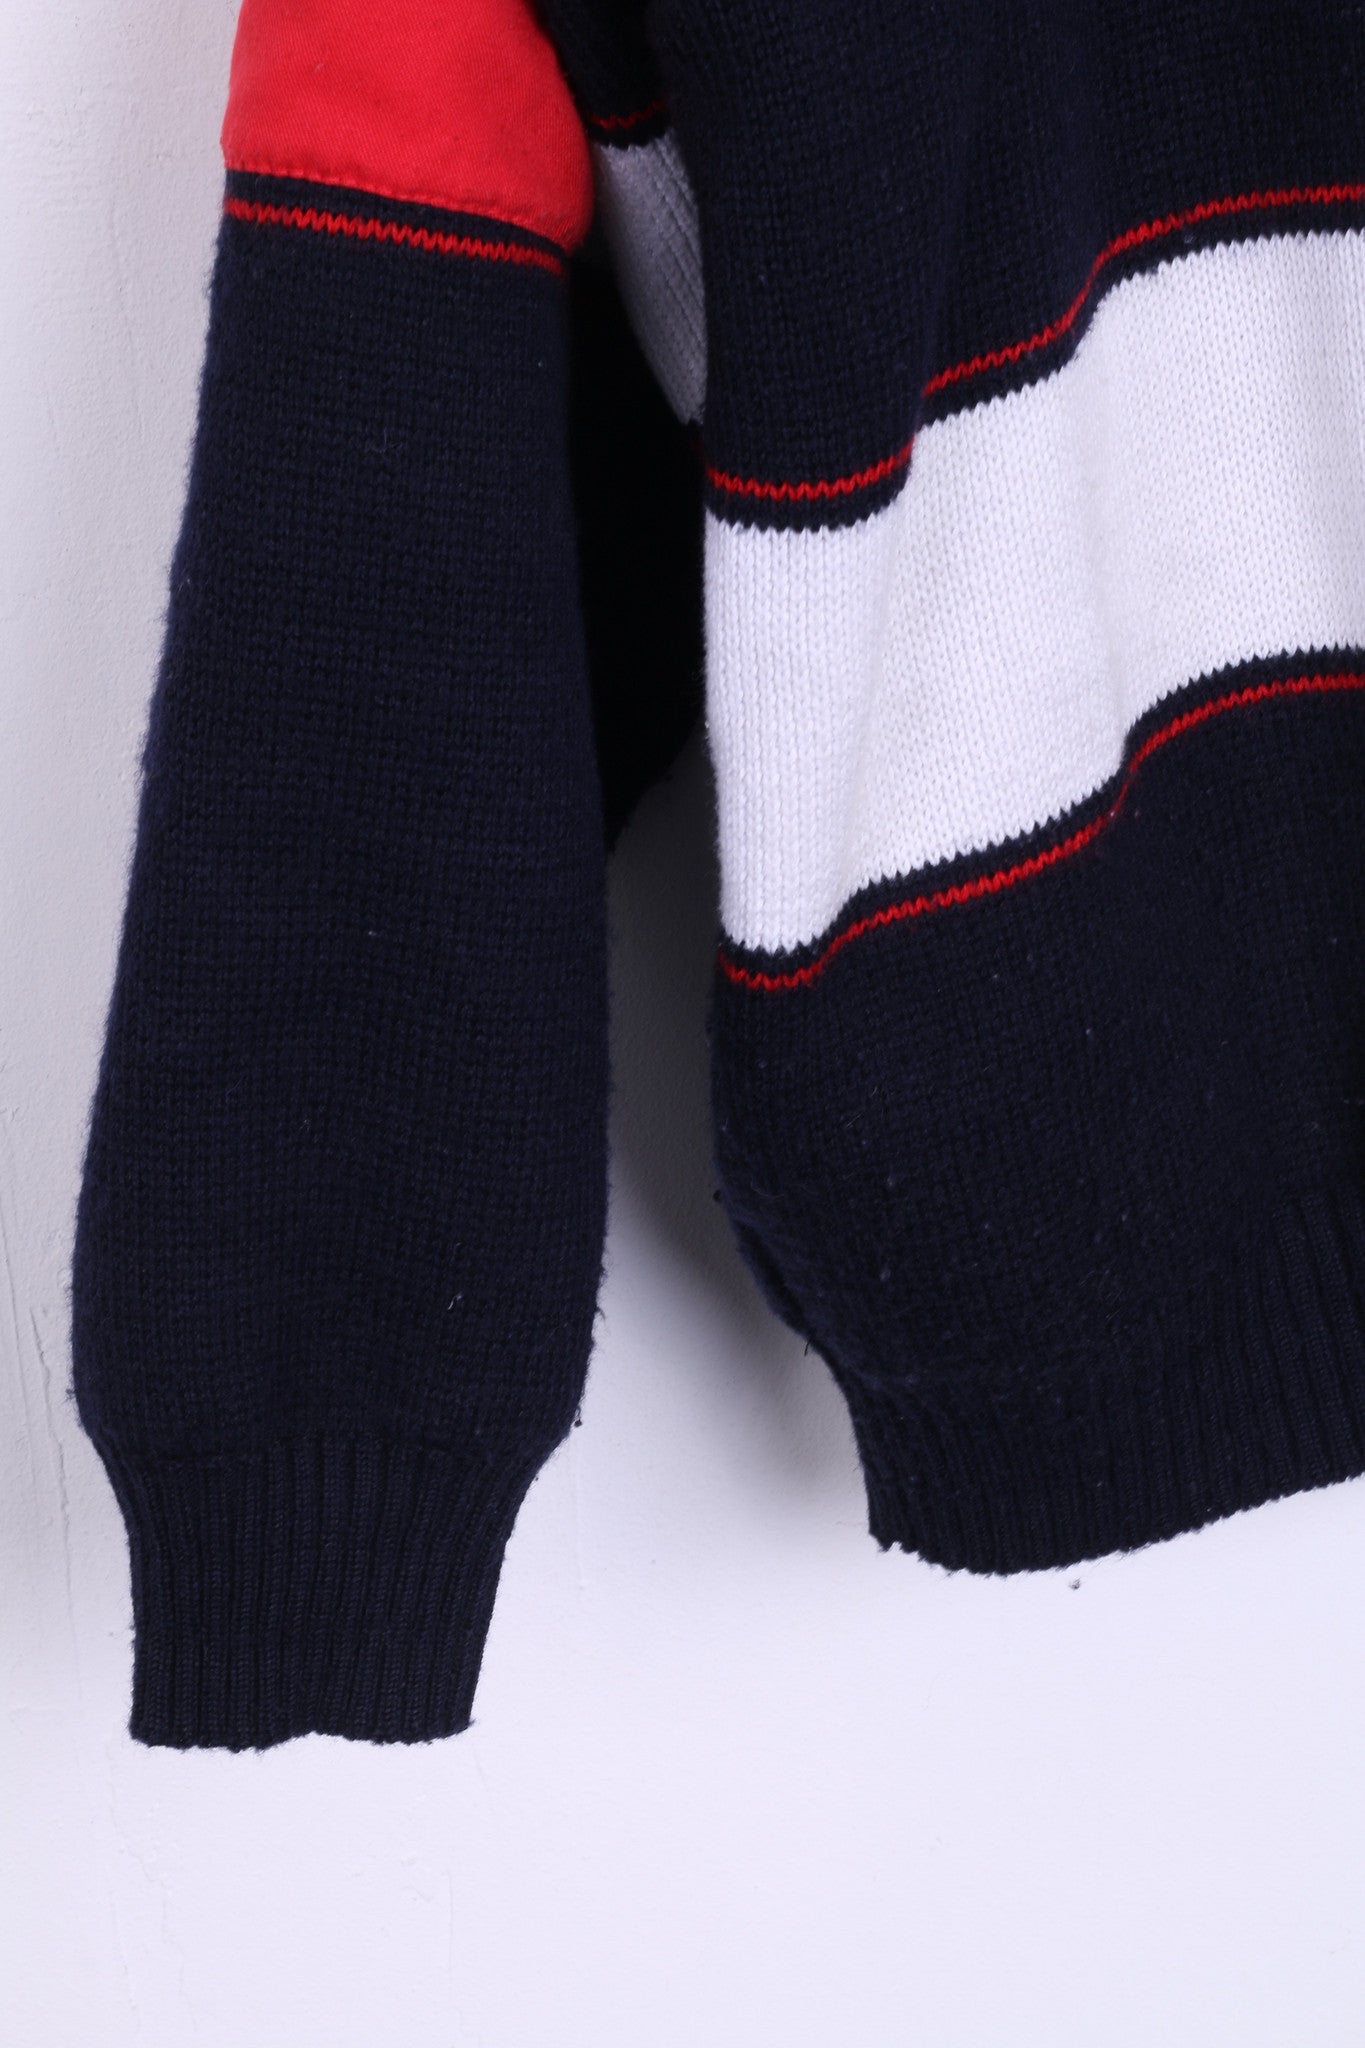 Navy Mens M Jumper Sweater Zip Neck Marine Jacket Striped Wool - RetrospectClothes